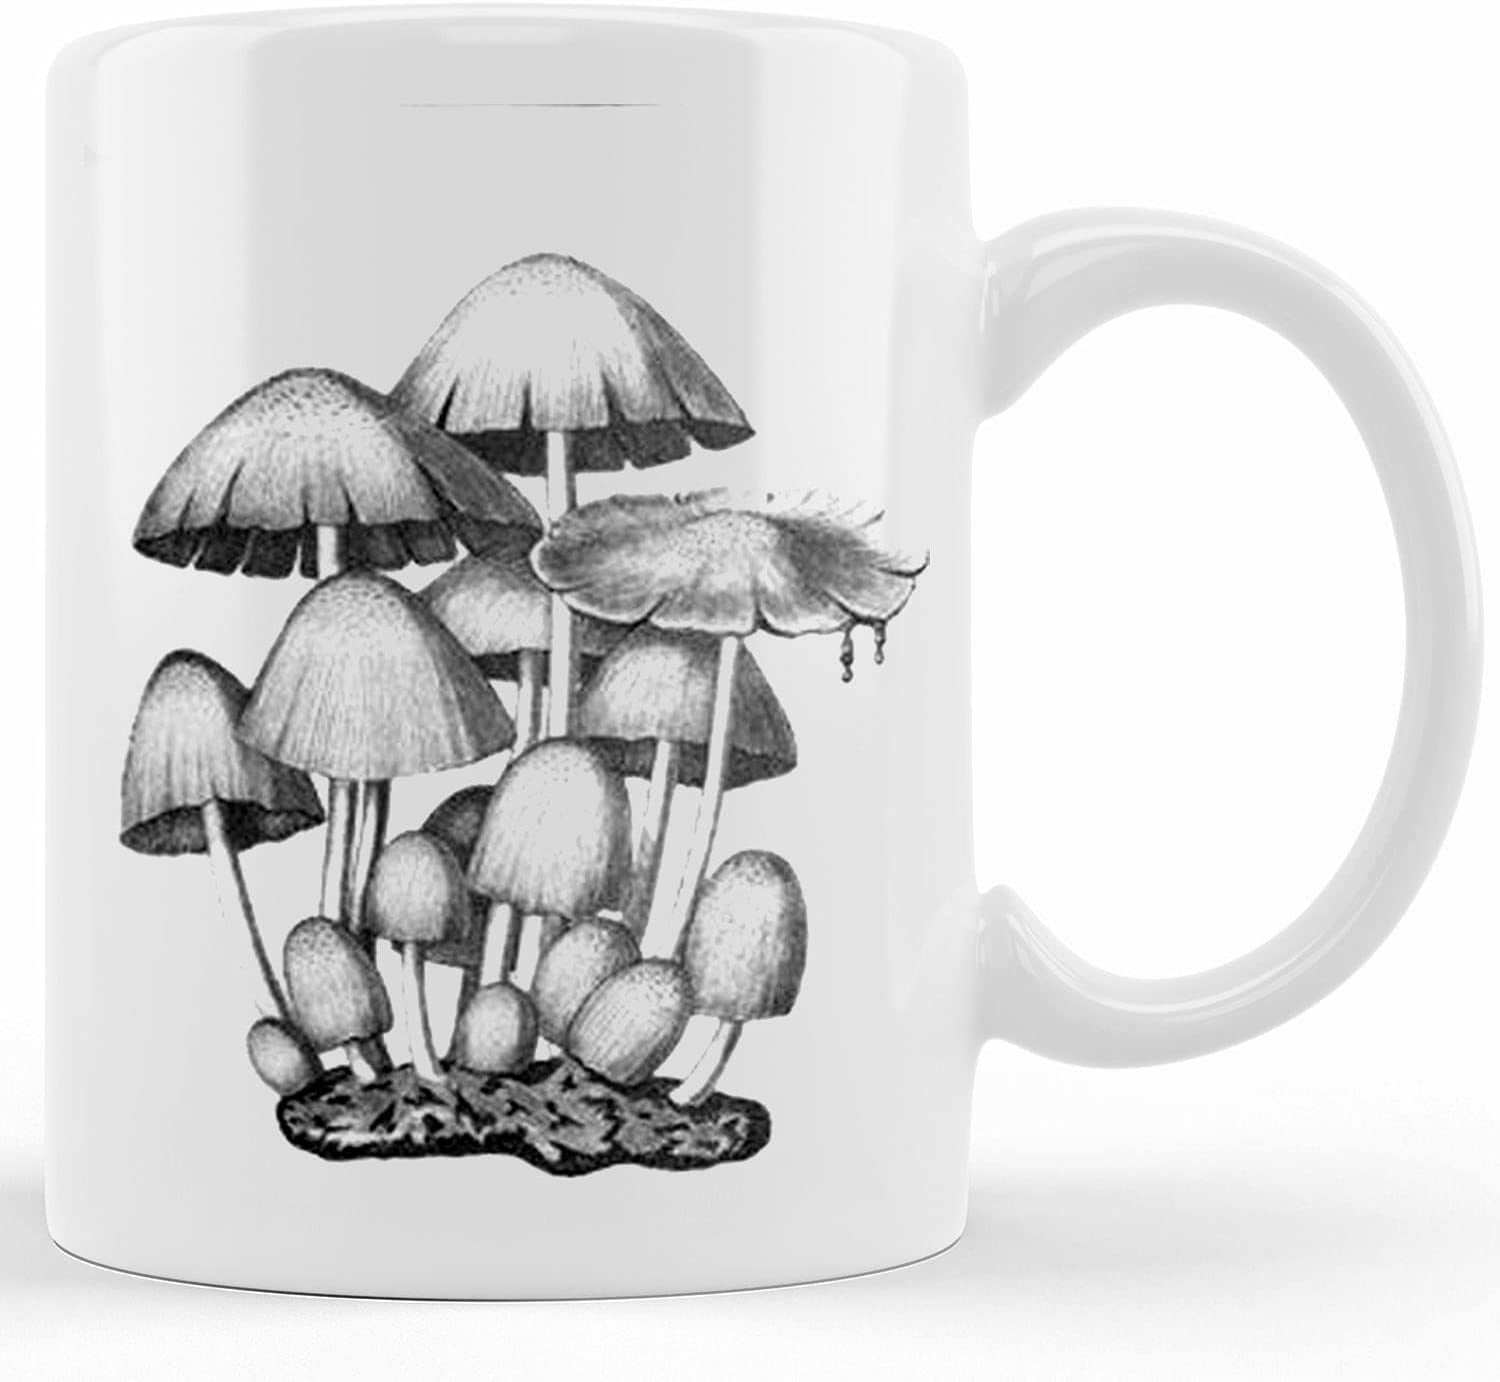 Enamel Mug - Mushroom